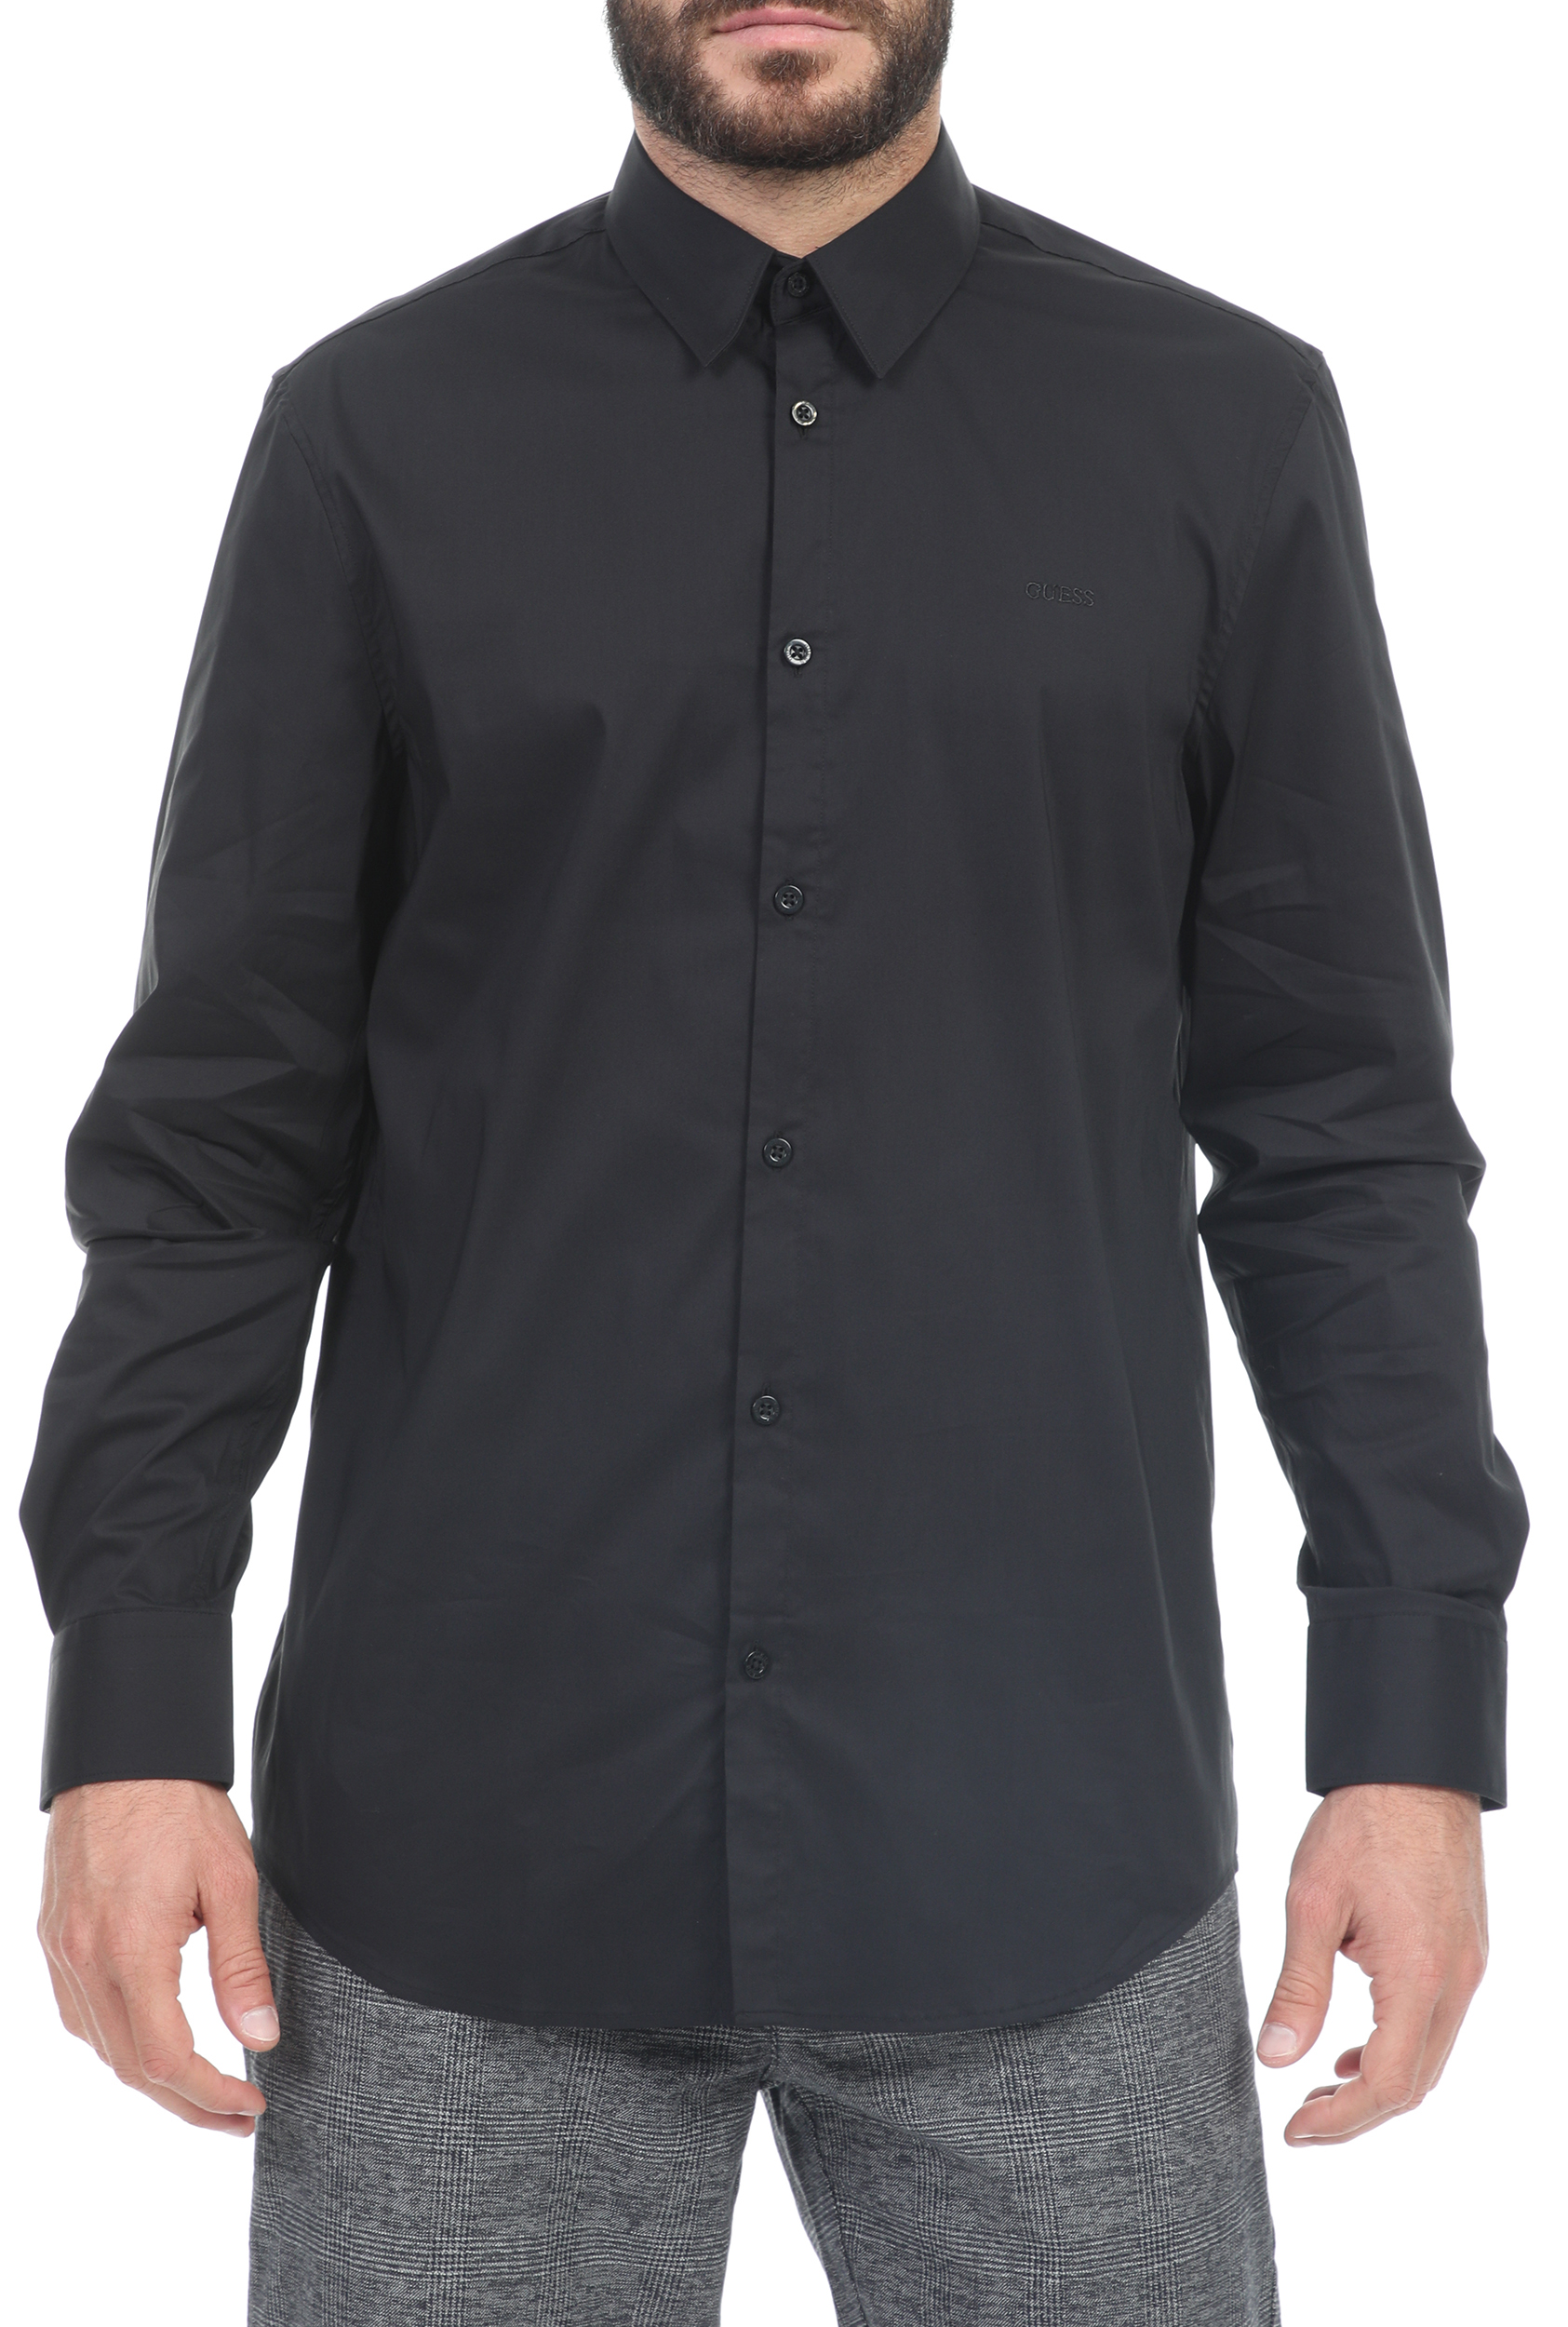 GUESS - Ανδρικό πουκάμισο GUESS SUNSET SHIRT - CLASSY STRE μαύρο